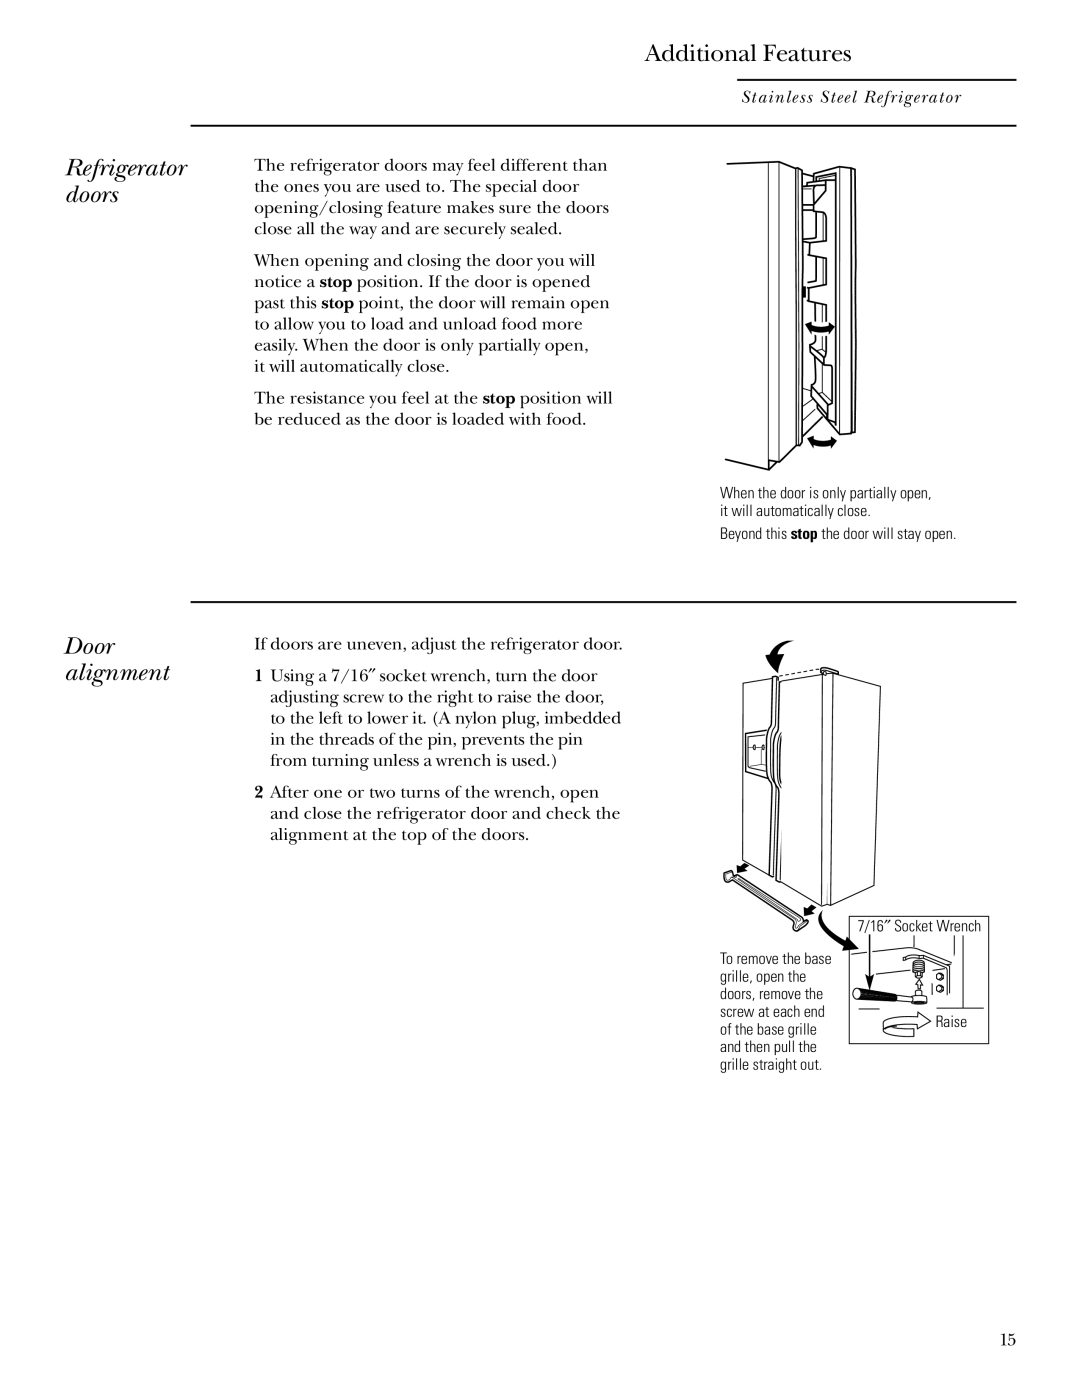 GE r10965v-1 owner manual Refrigerator doors, Additional Features, Door alignment 